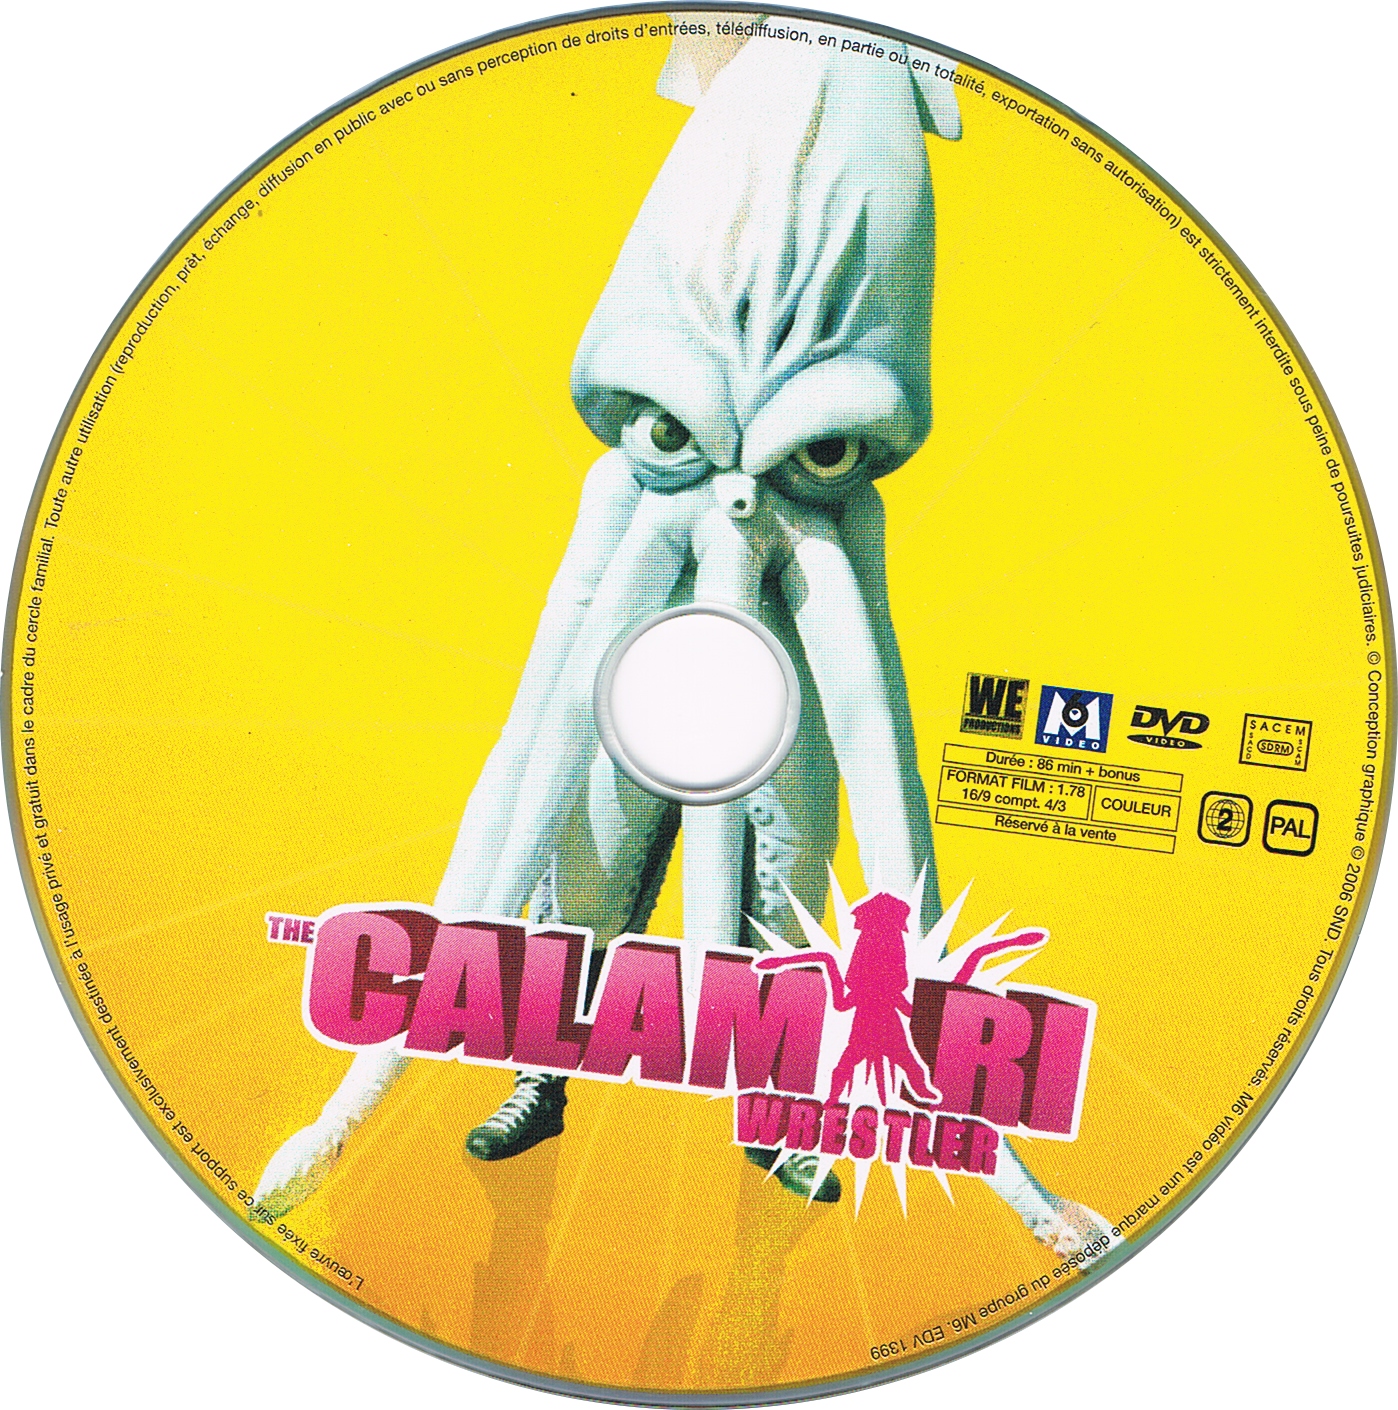 The Calamari Wrestler - Le Catcheur Calamar